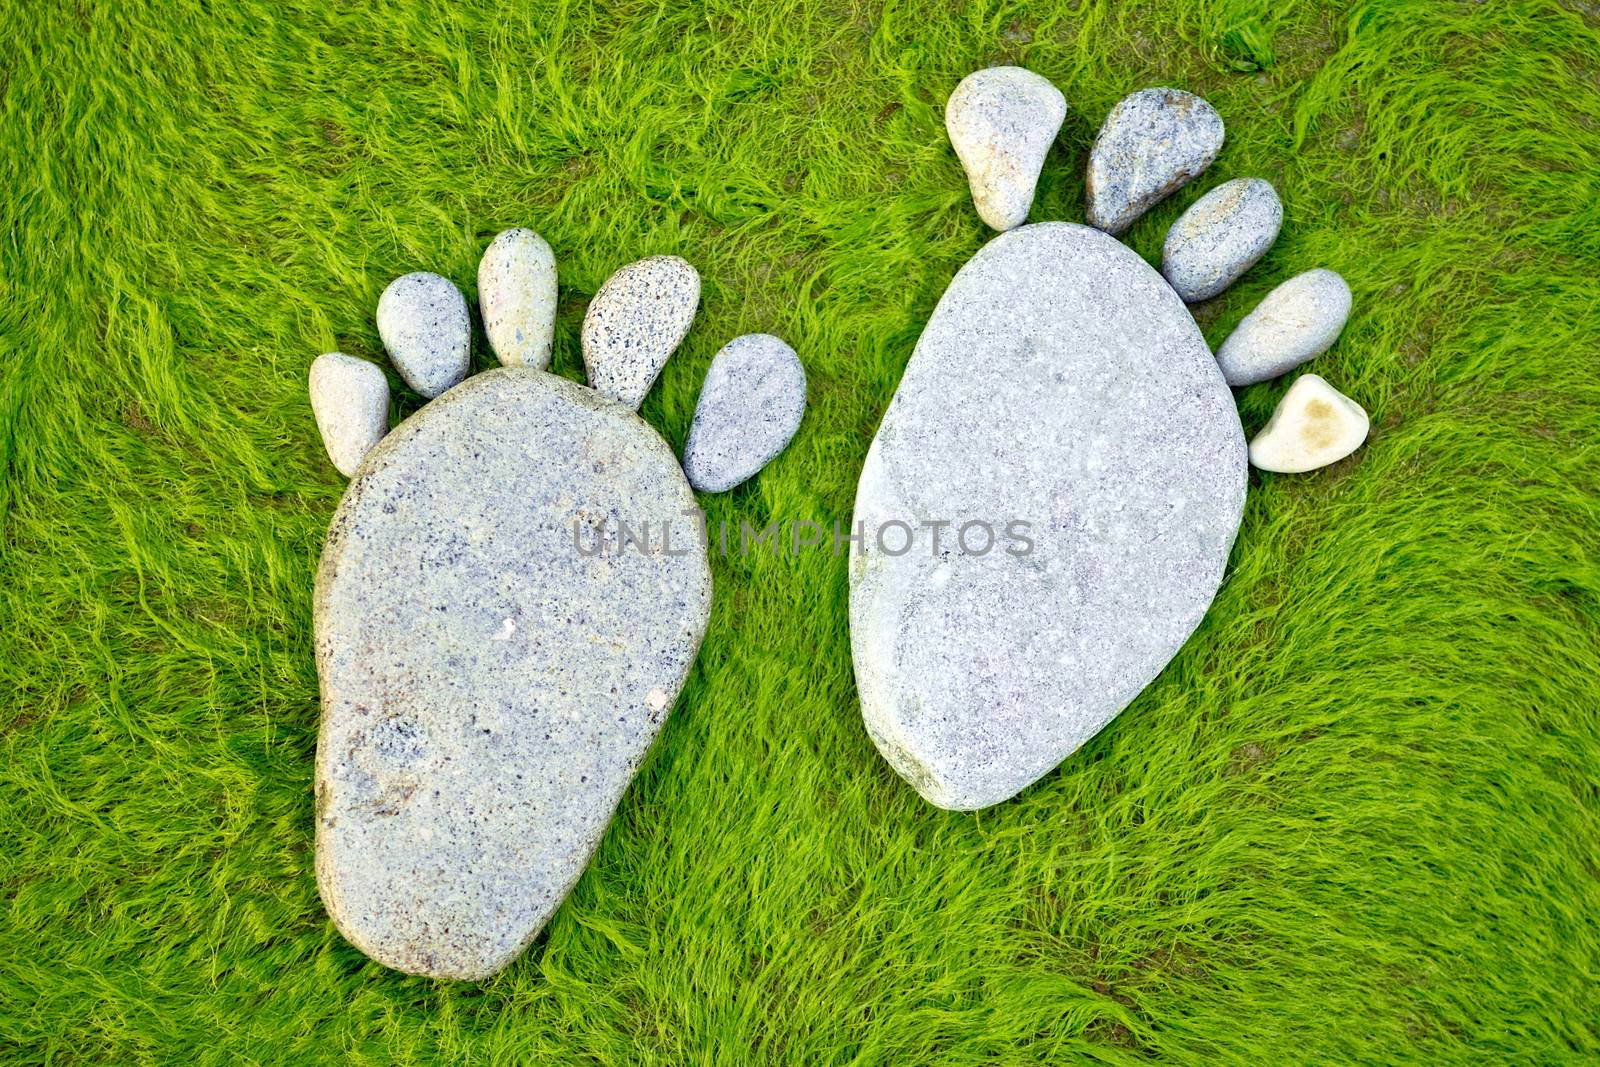 Stone footprints by styf22